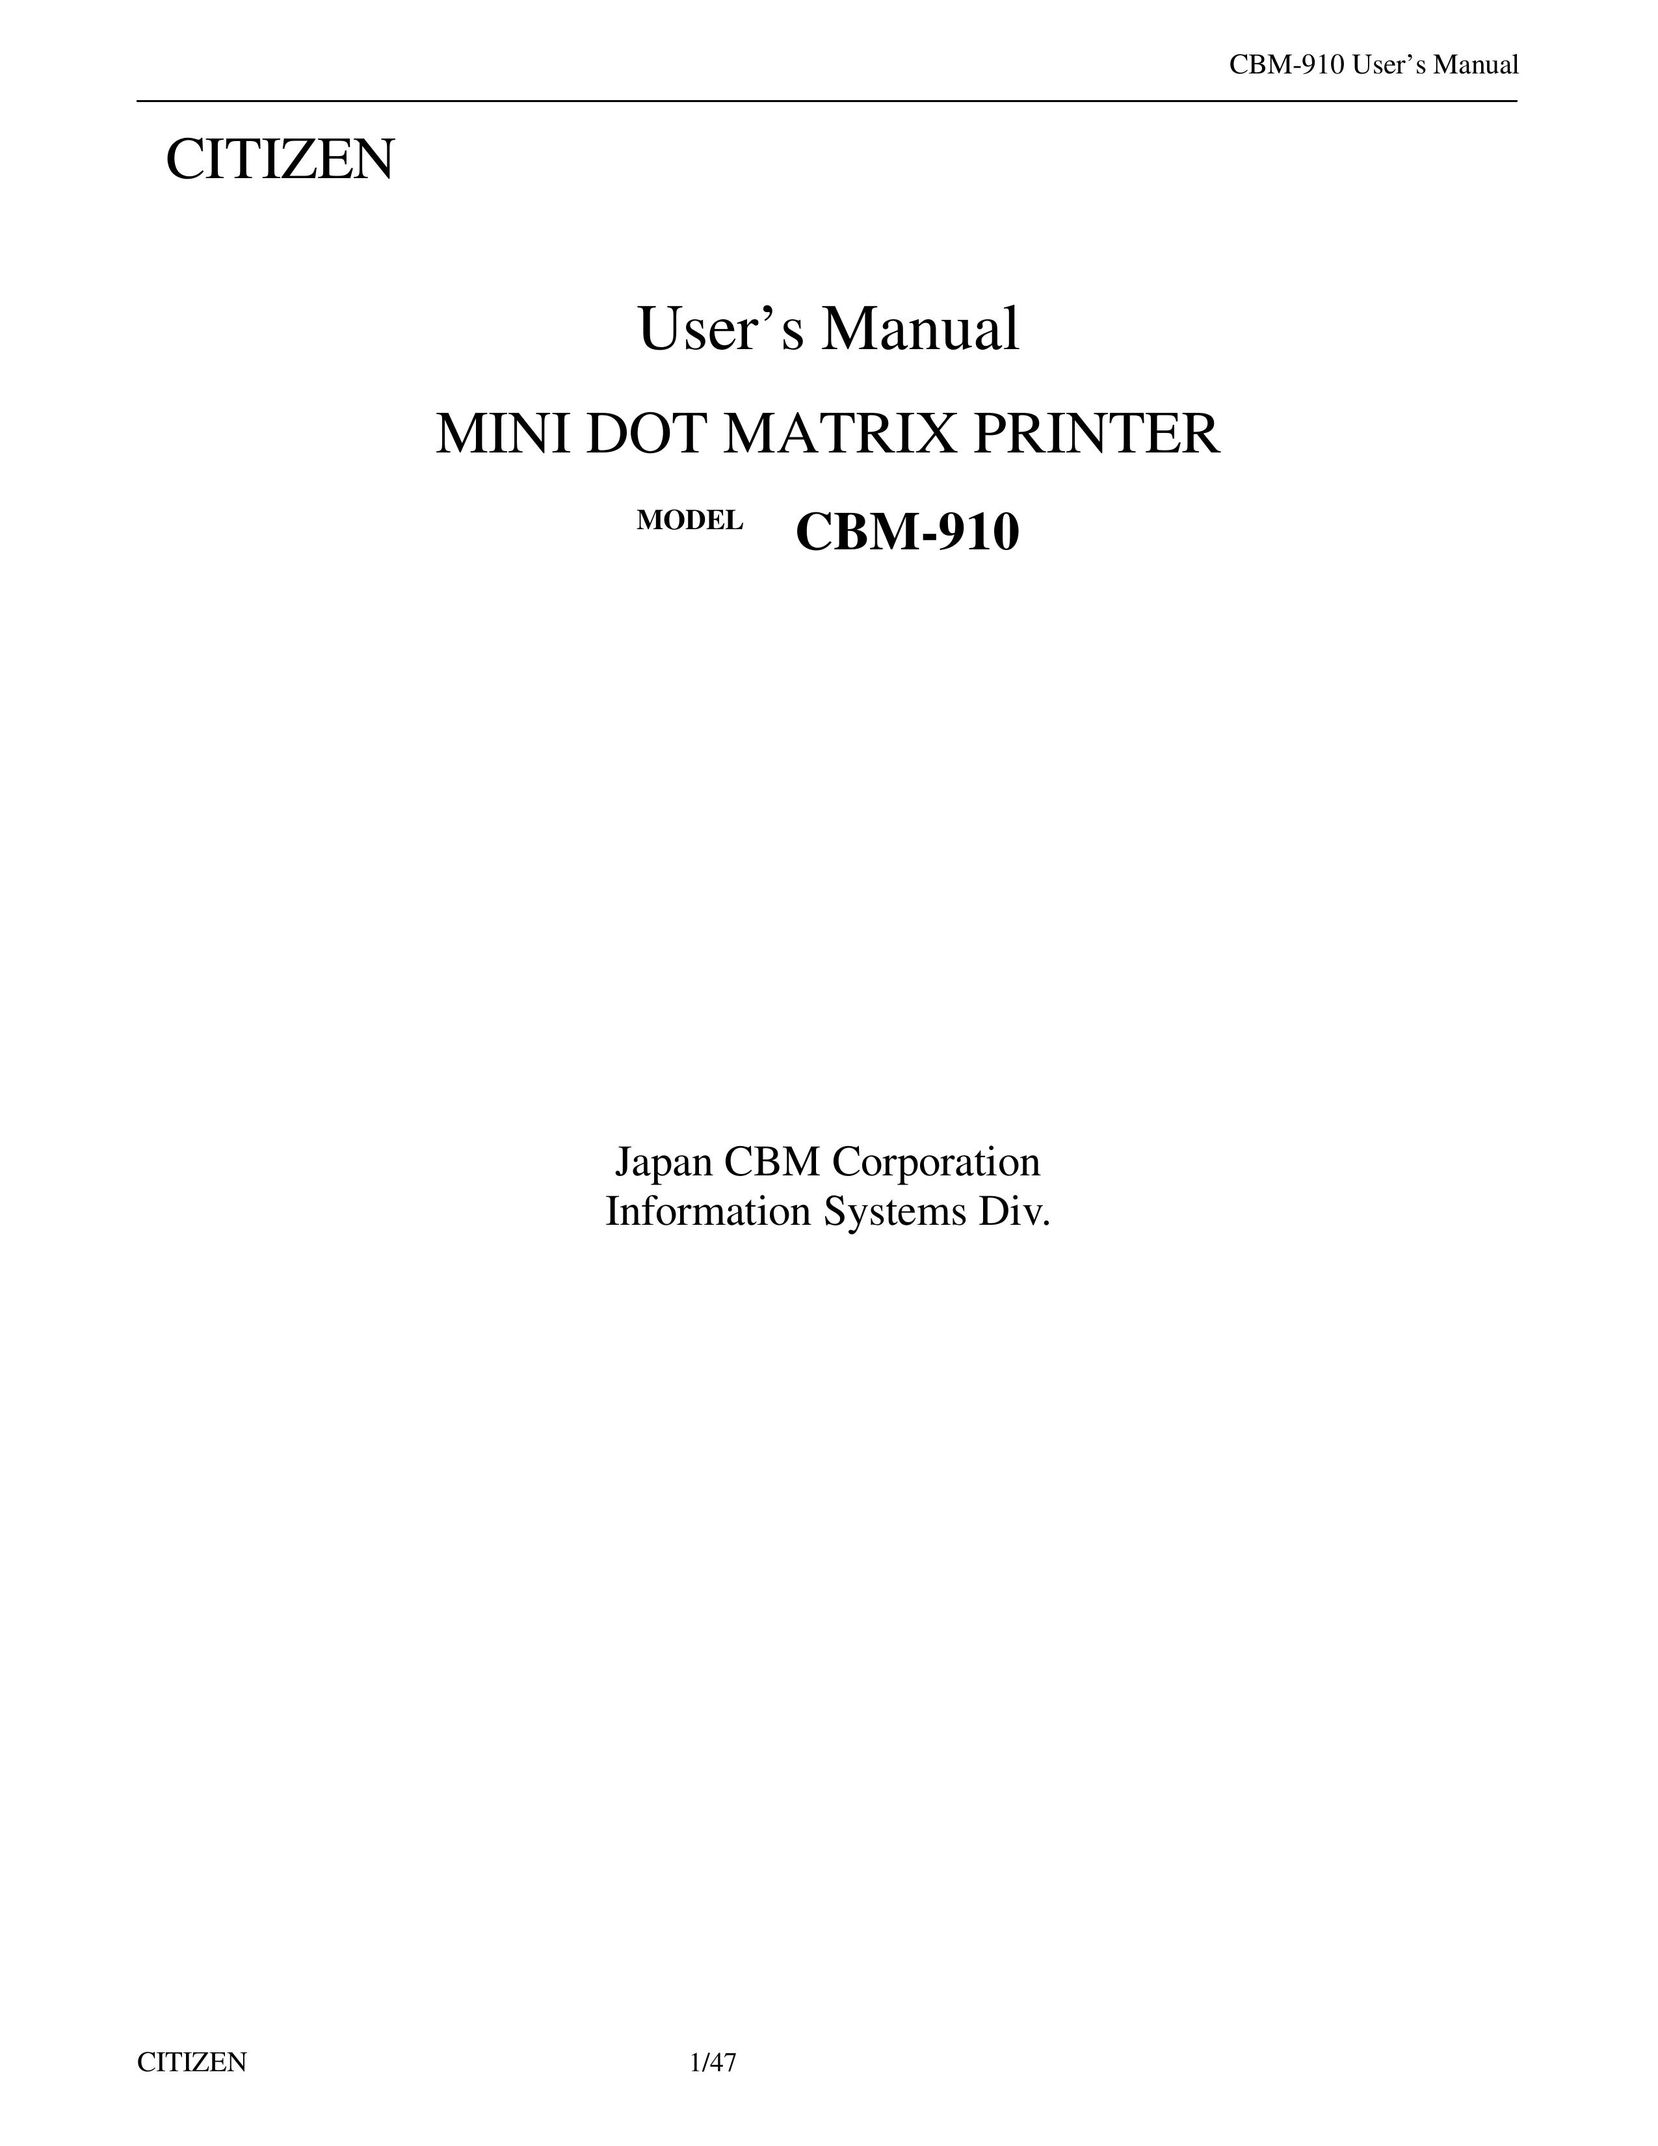 Citizen Systems CBM-910 Printer User Manual